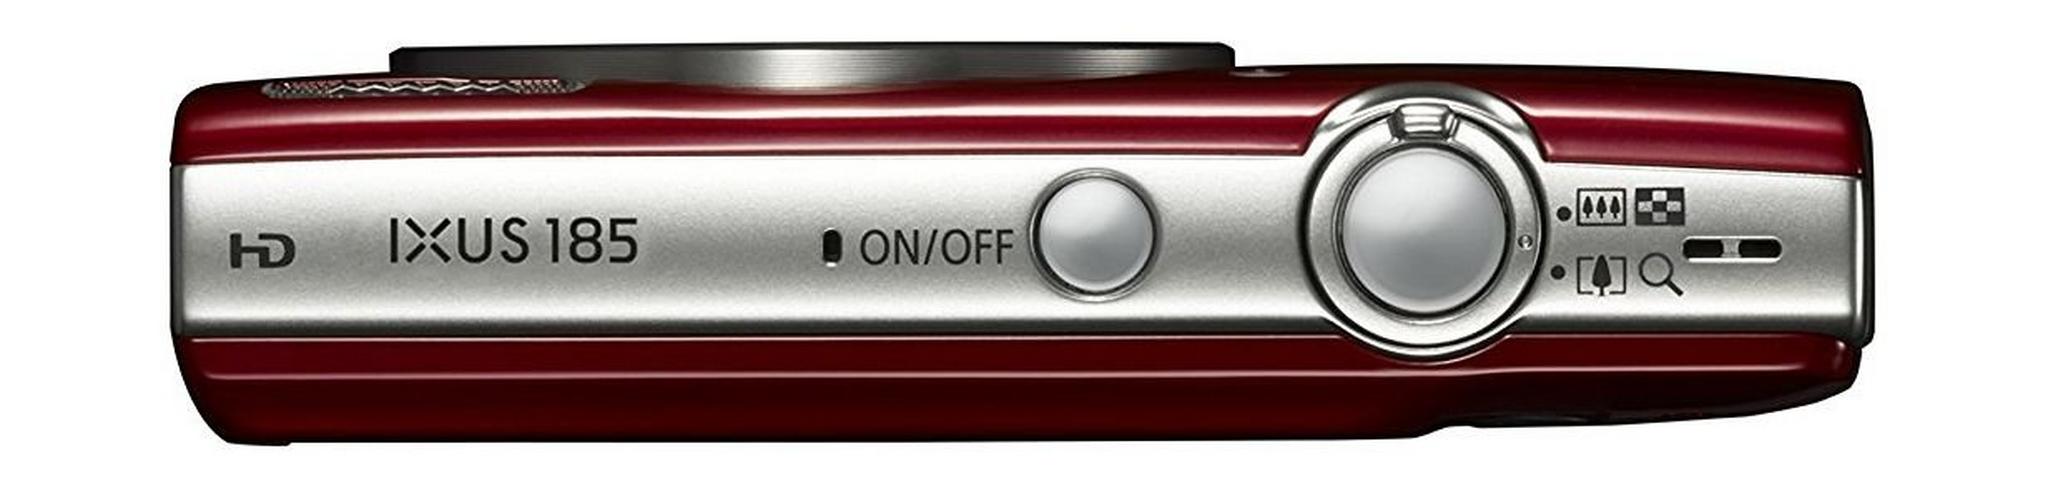 Canon IXUS 185 Digital Camera, 20MP 2.7-inch LCD Display – Red